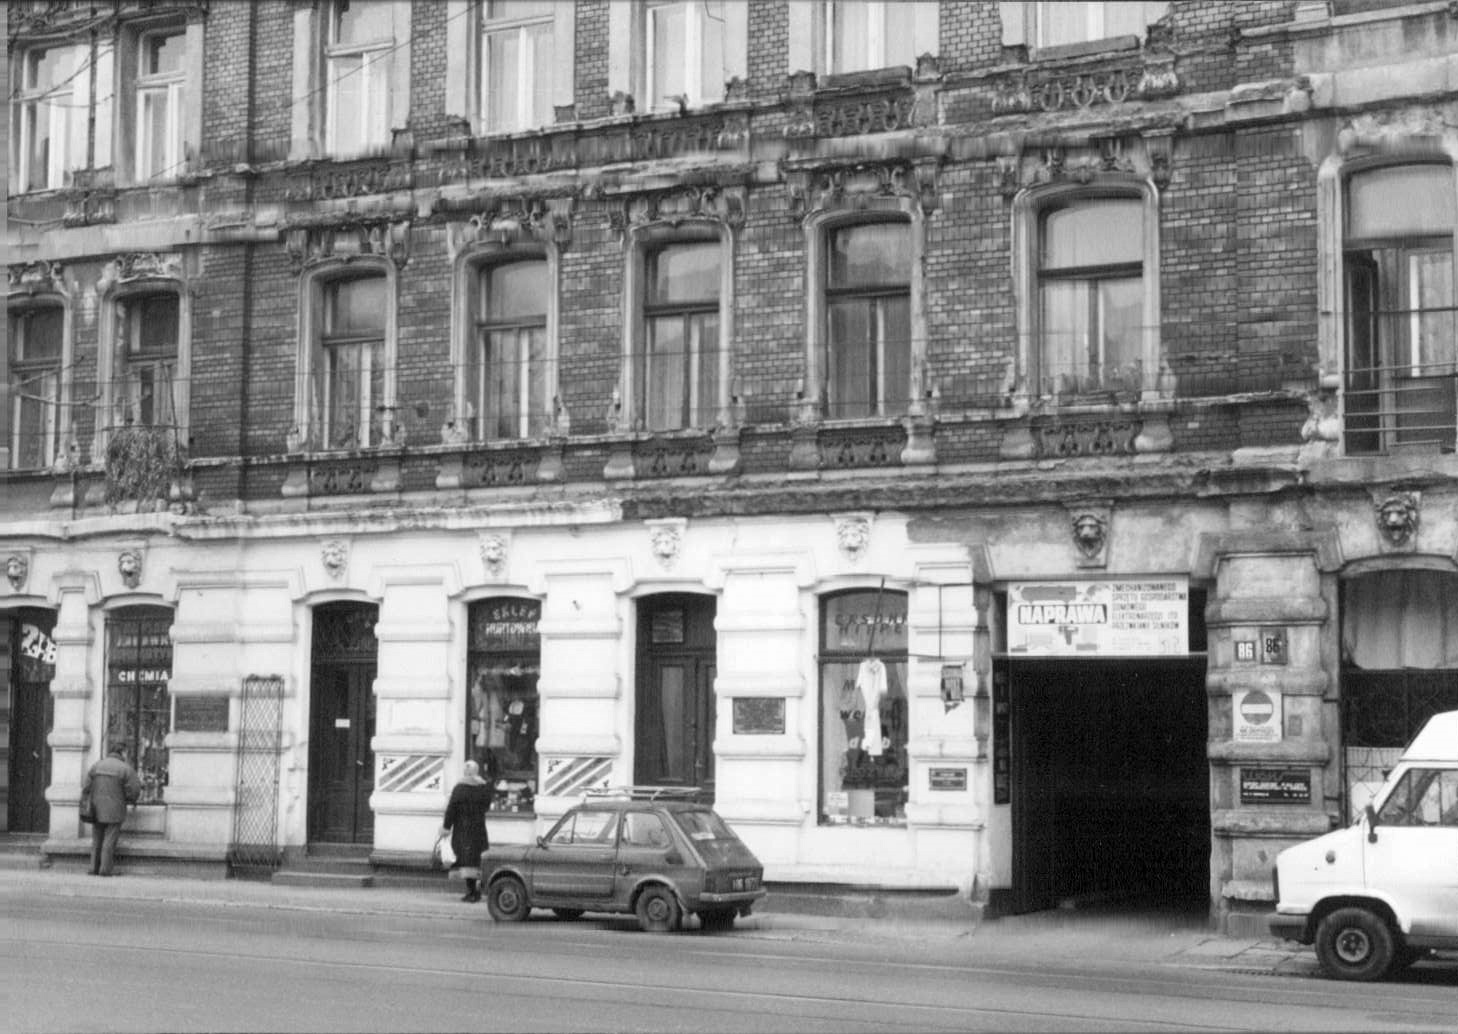 Łódź street scenes, 1990